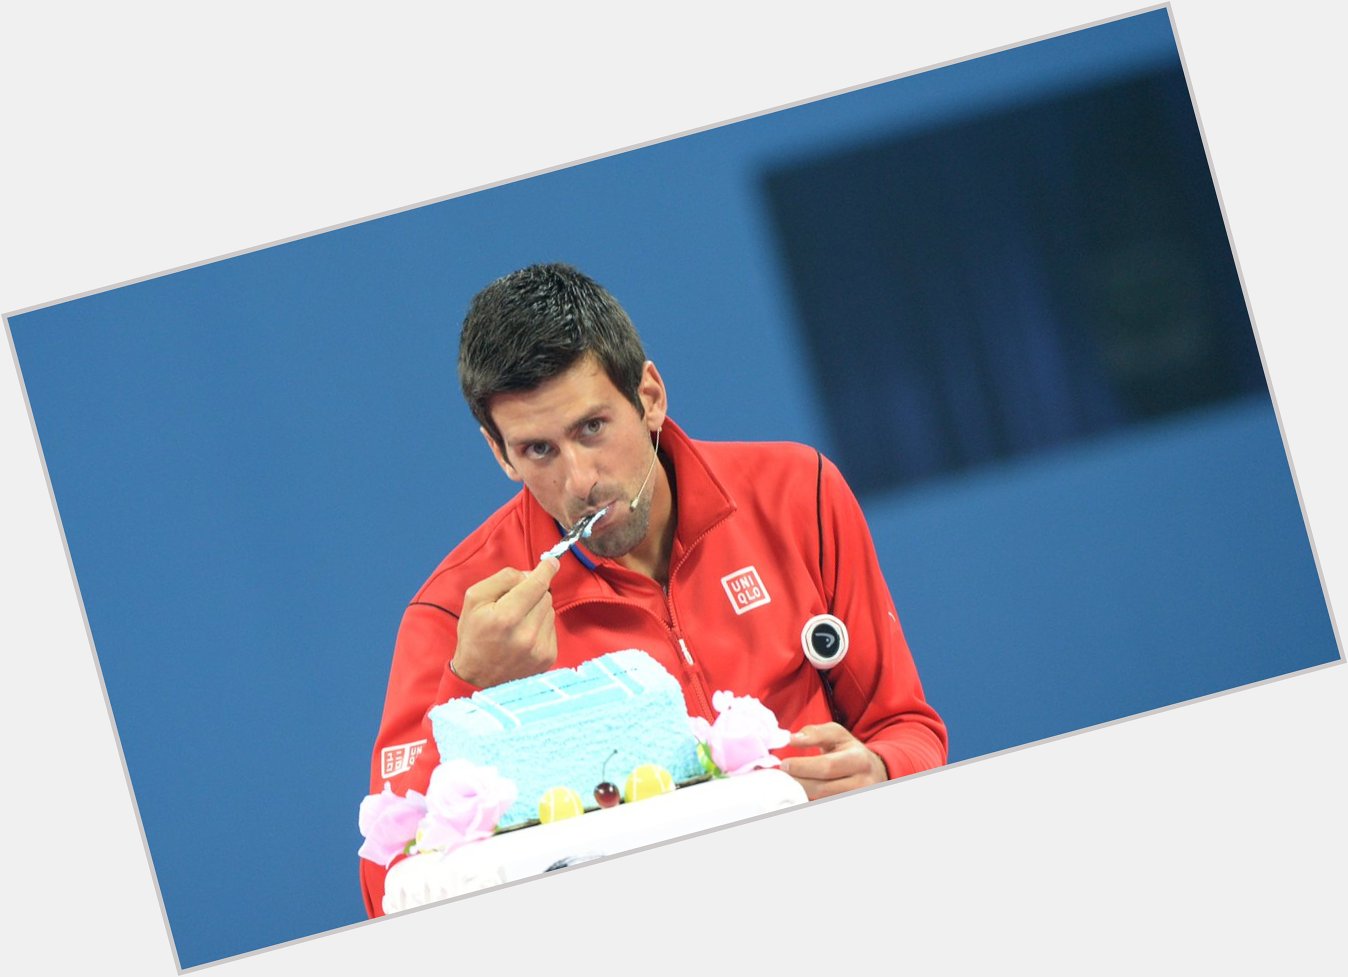 Happy 33rd birthday to Novak Djokovic! Will his wish of winning more Grand Slams than Roger Federer come true? 